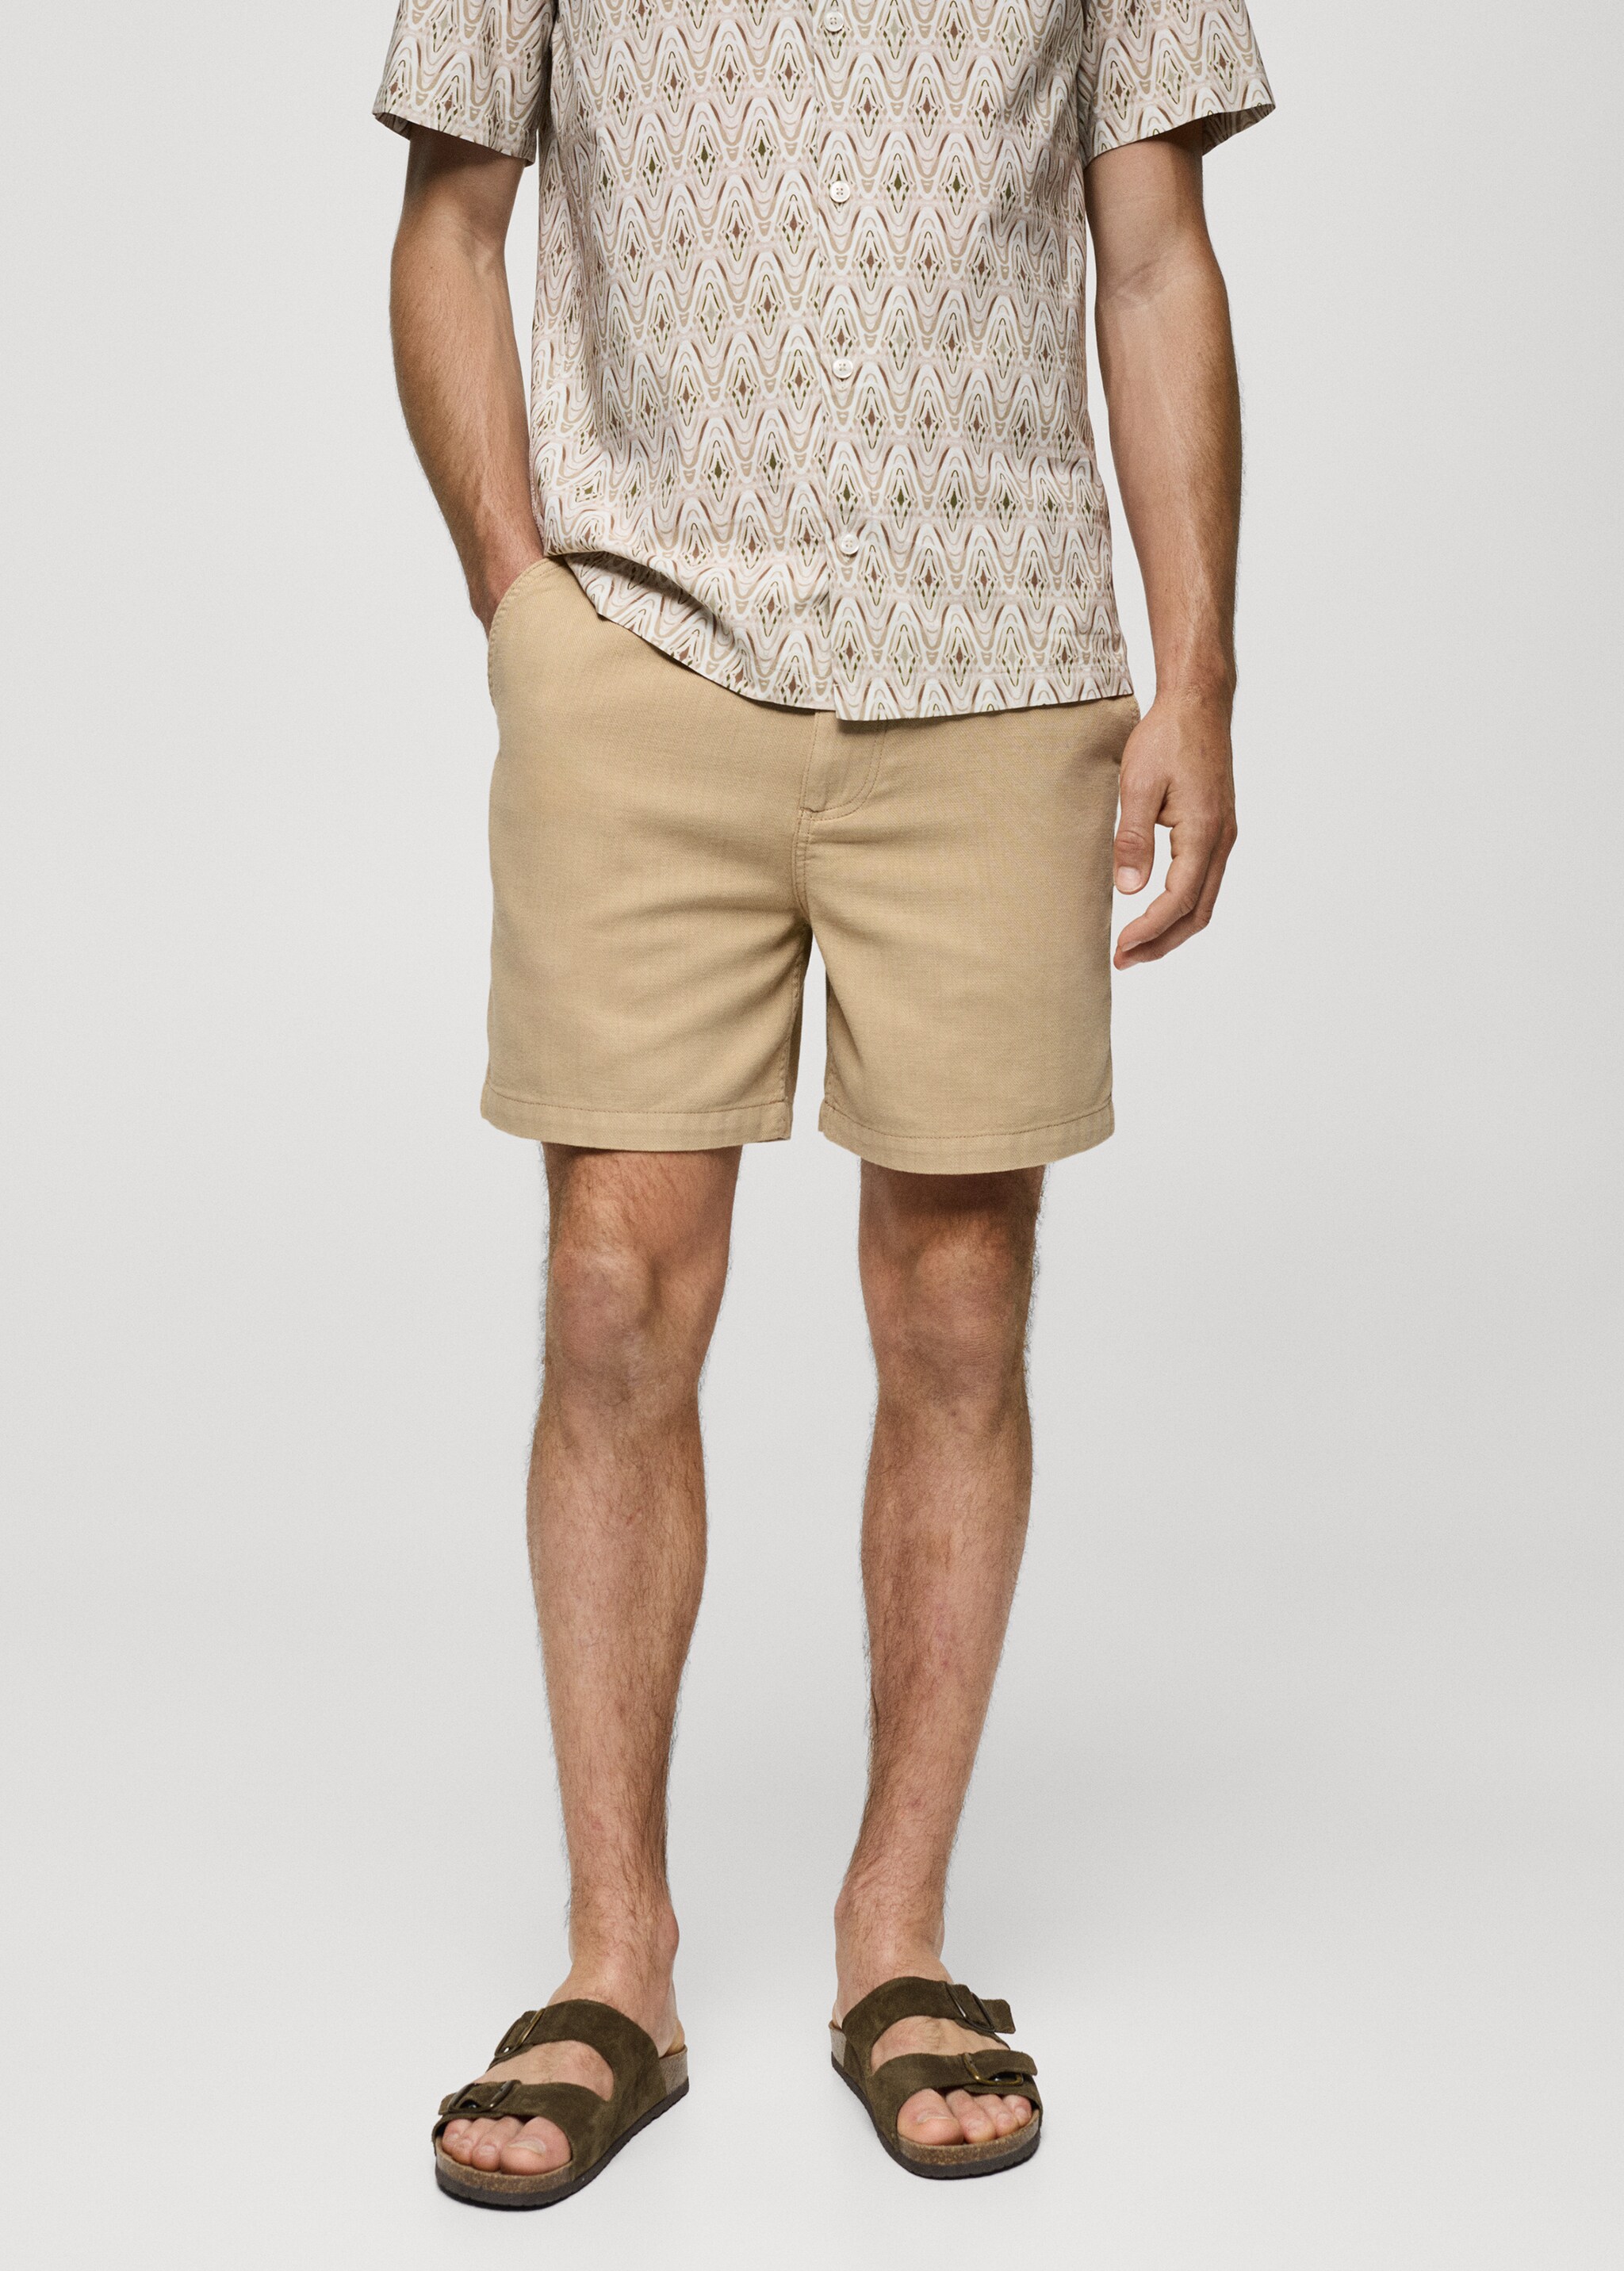 Pockets cotton Bermuda shorts - Medium plane